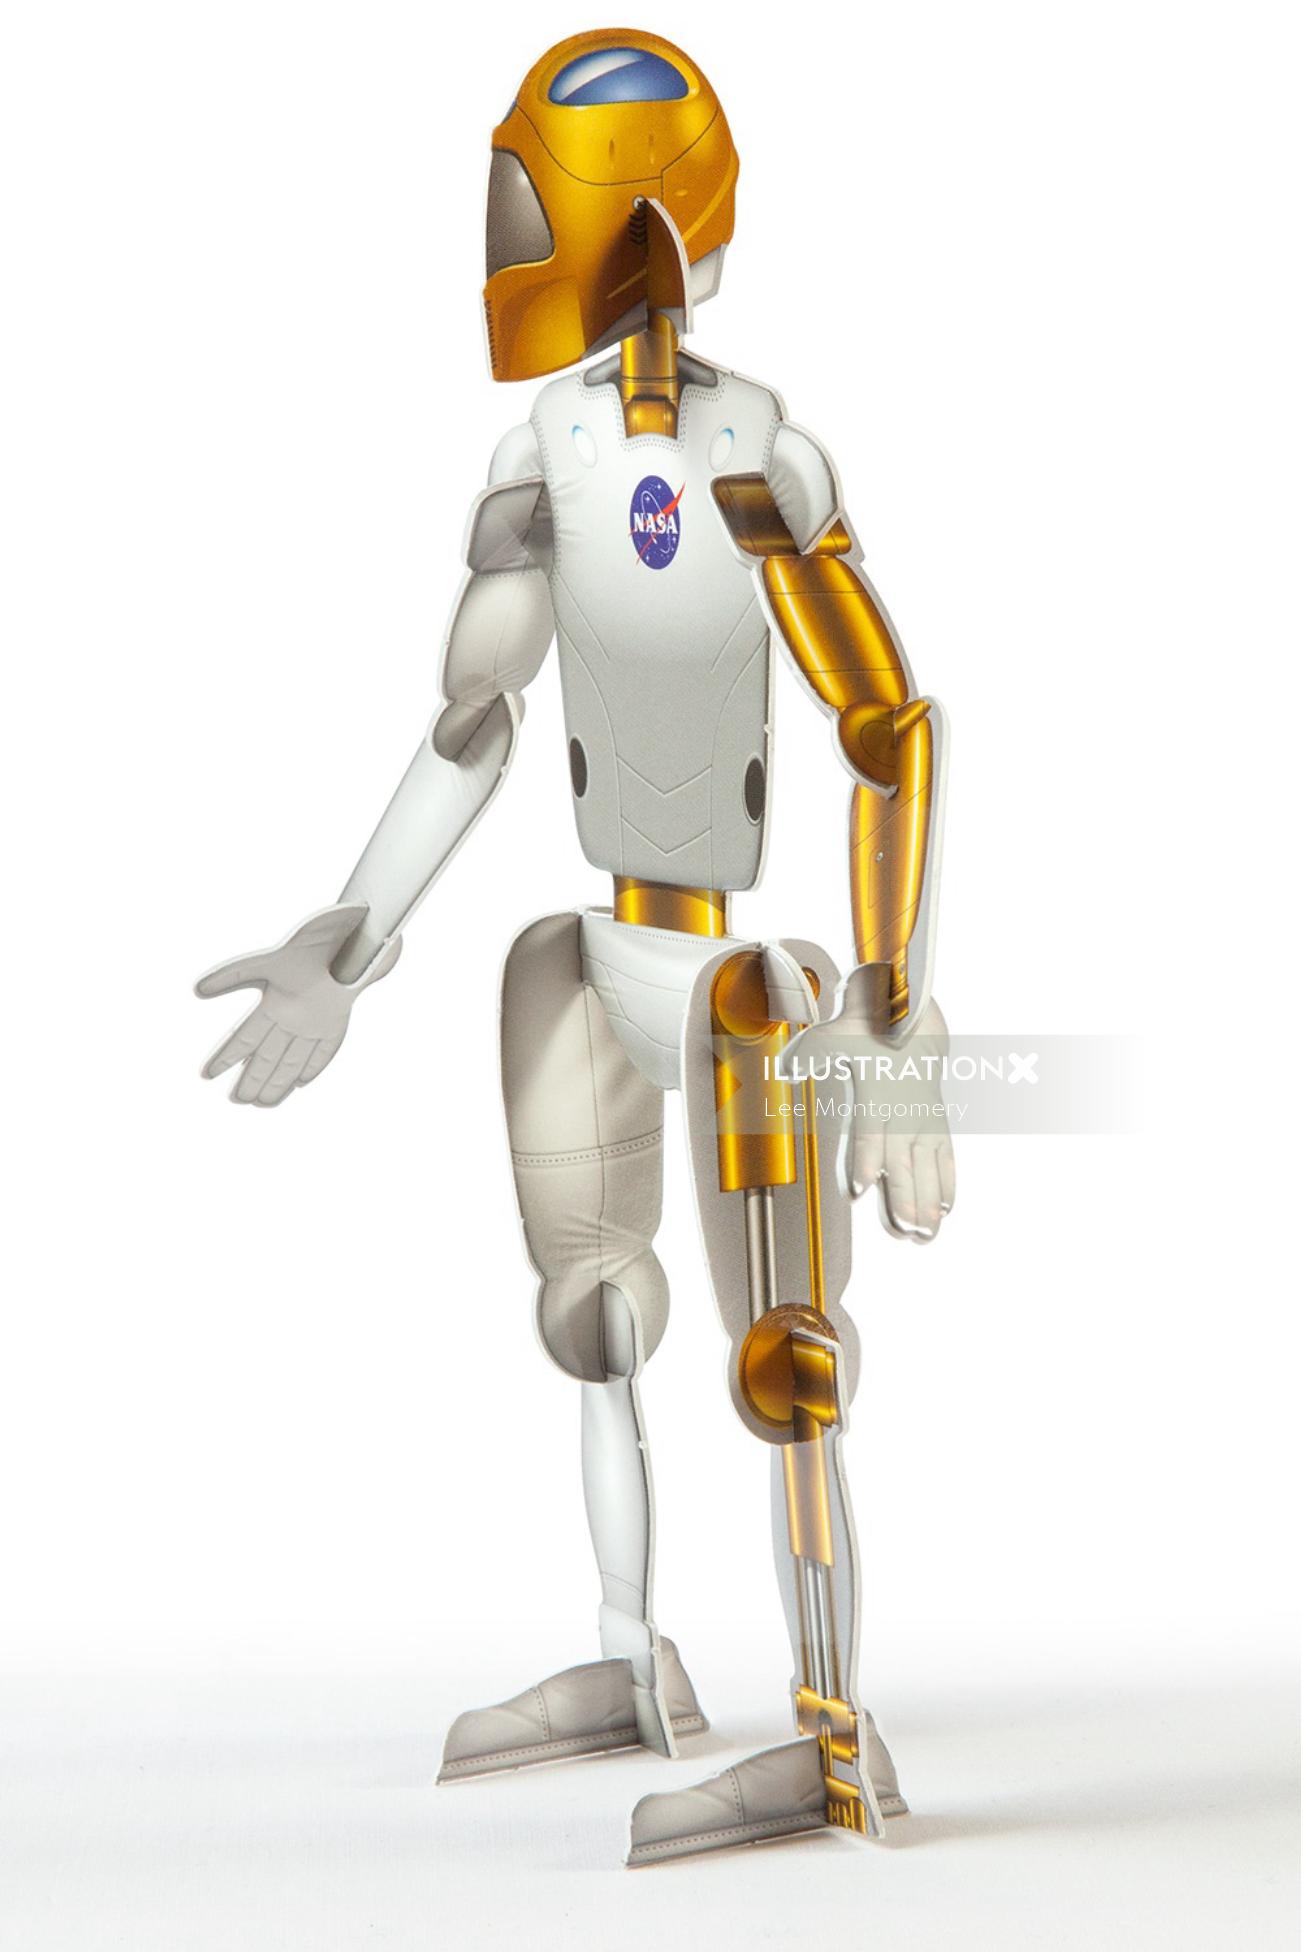 Illustration of NASA robot model